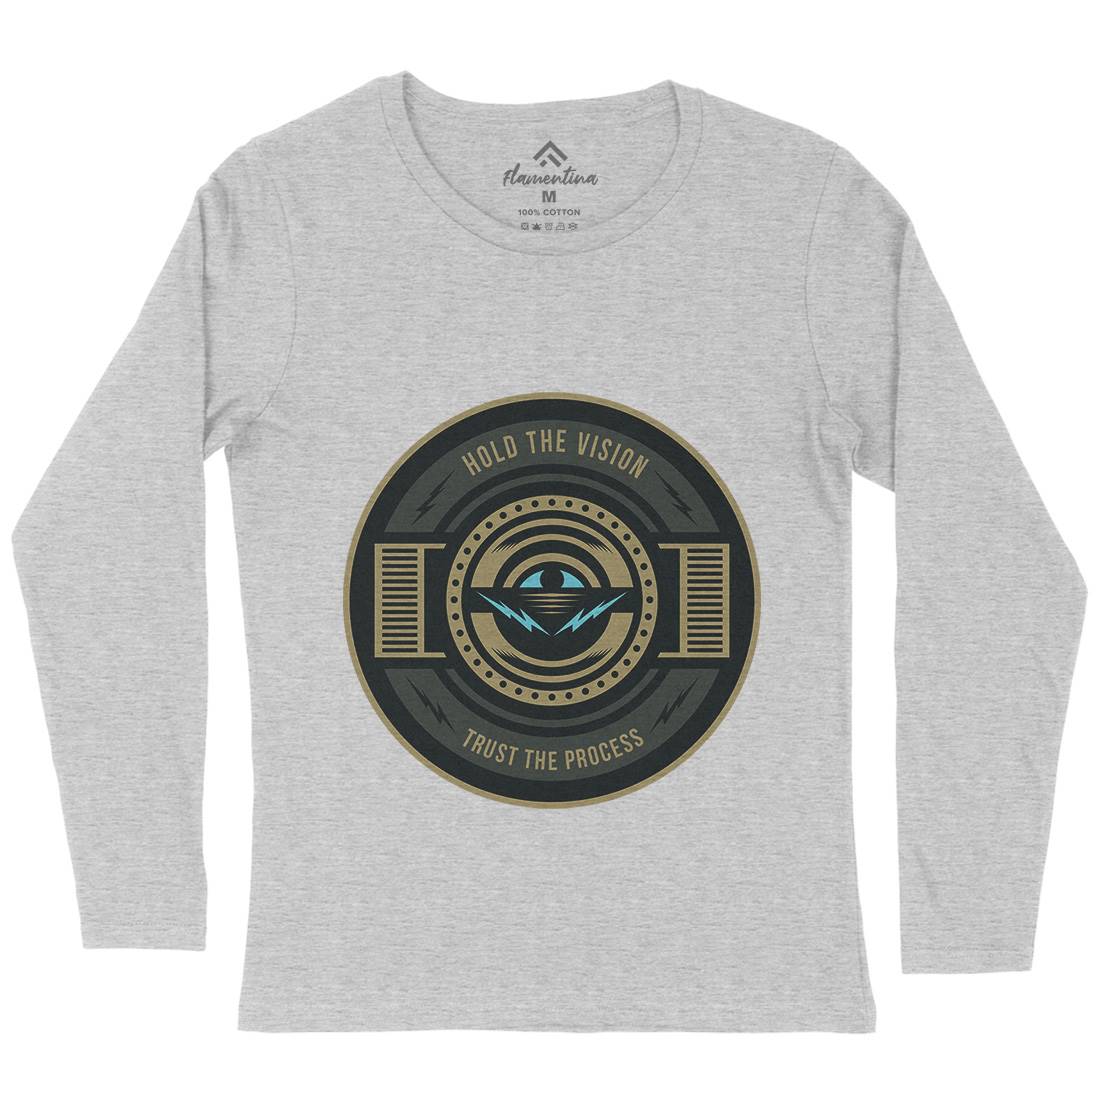 Hold The Vision Womens Long Sleeve T-Shirt Illuminati A331